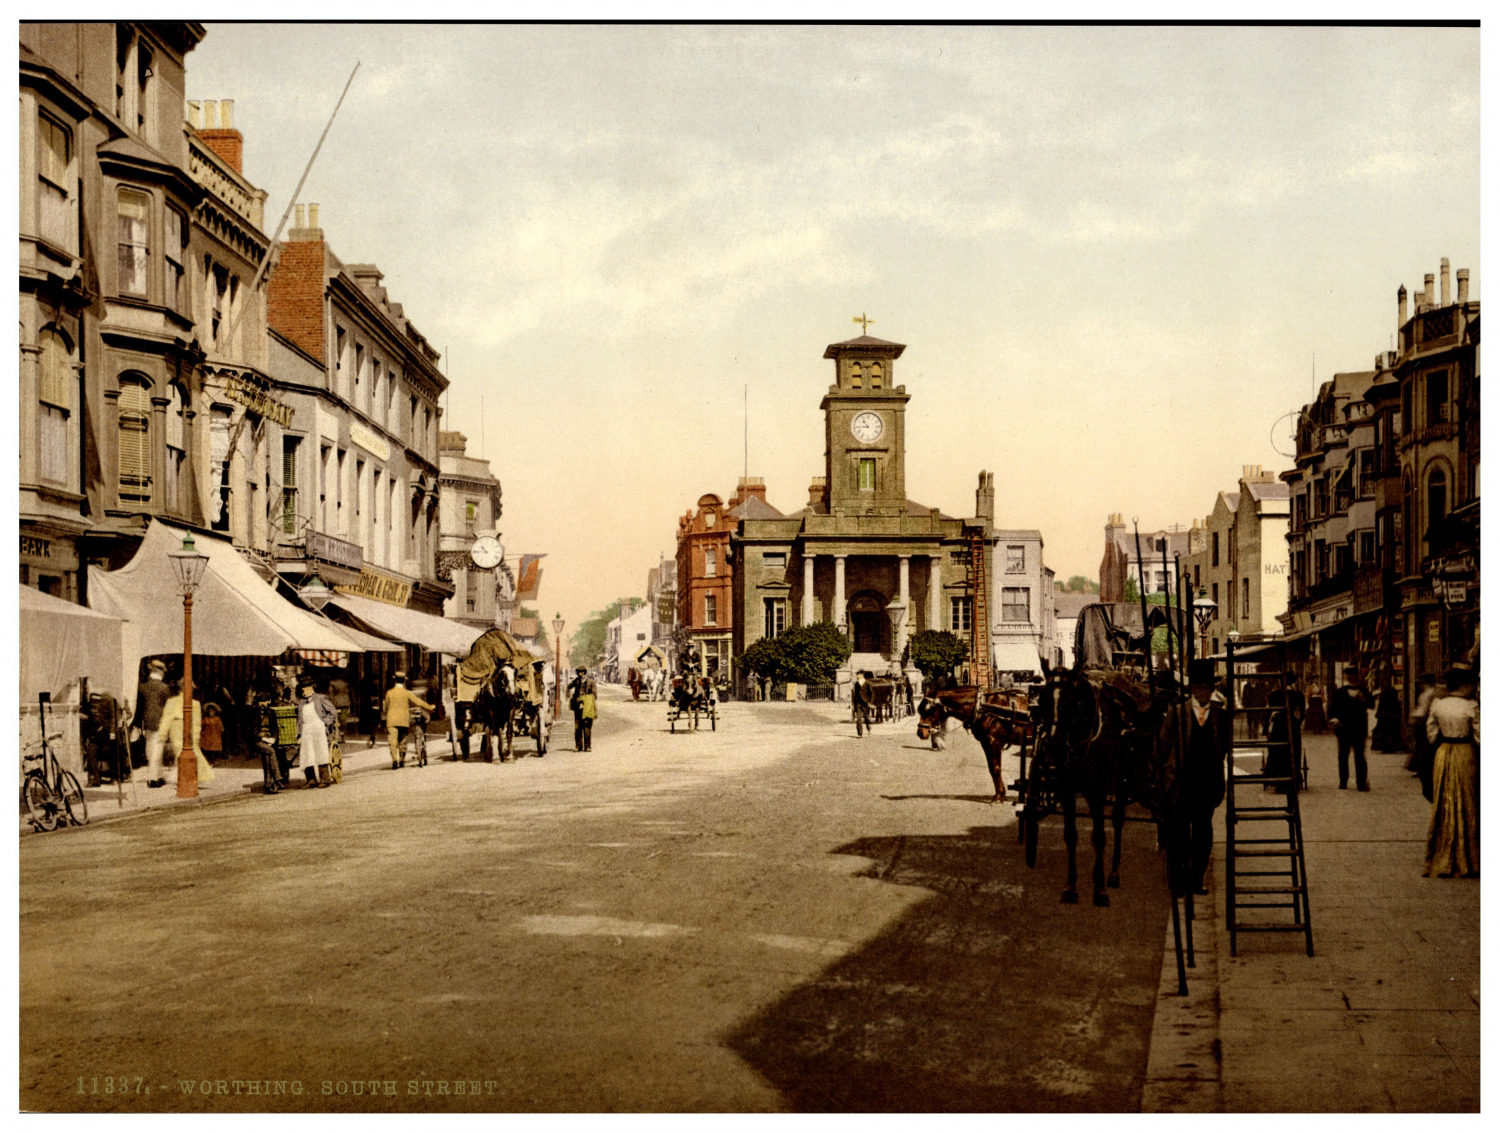 England. Worthing. South Street. Vintage photochrome by P.Z, photochrome Zurich